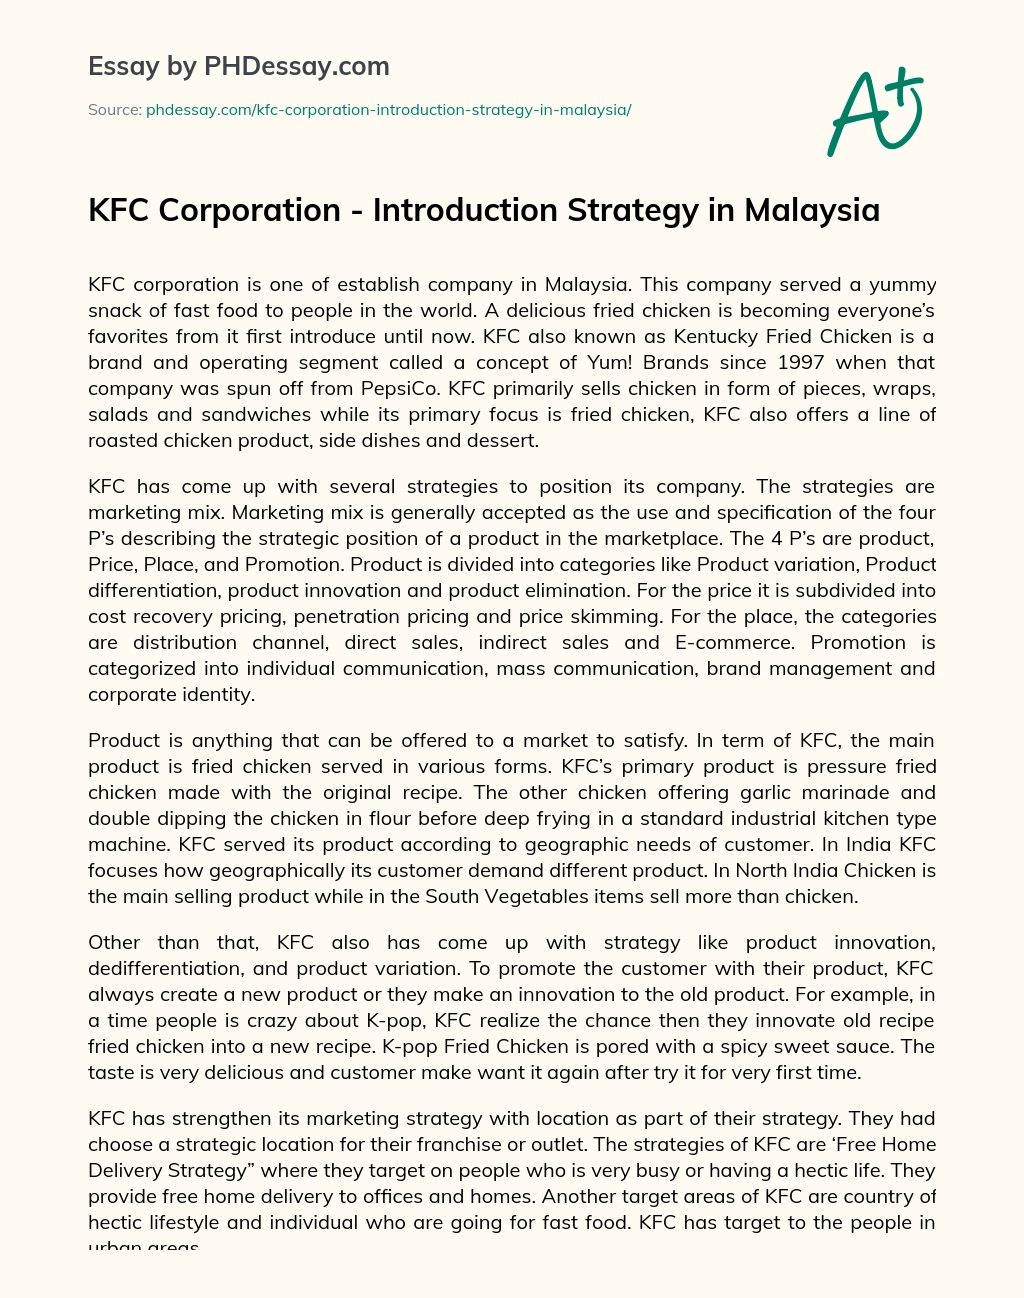 KFC Corporation – Introduction Strategy in Malaysia essay